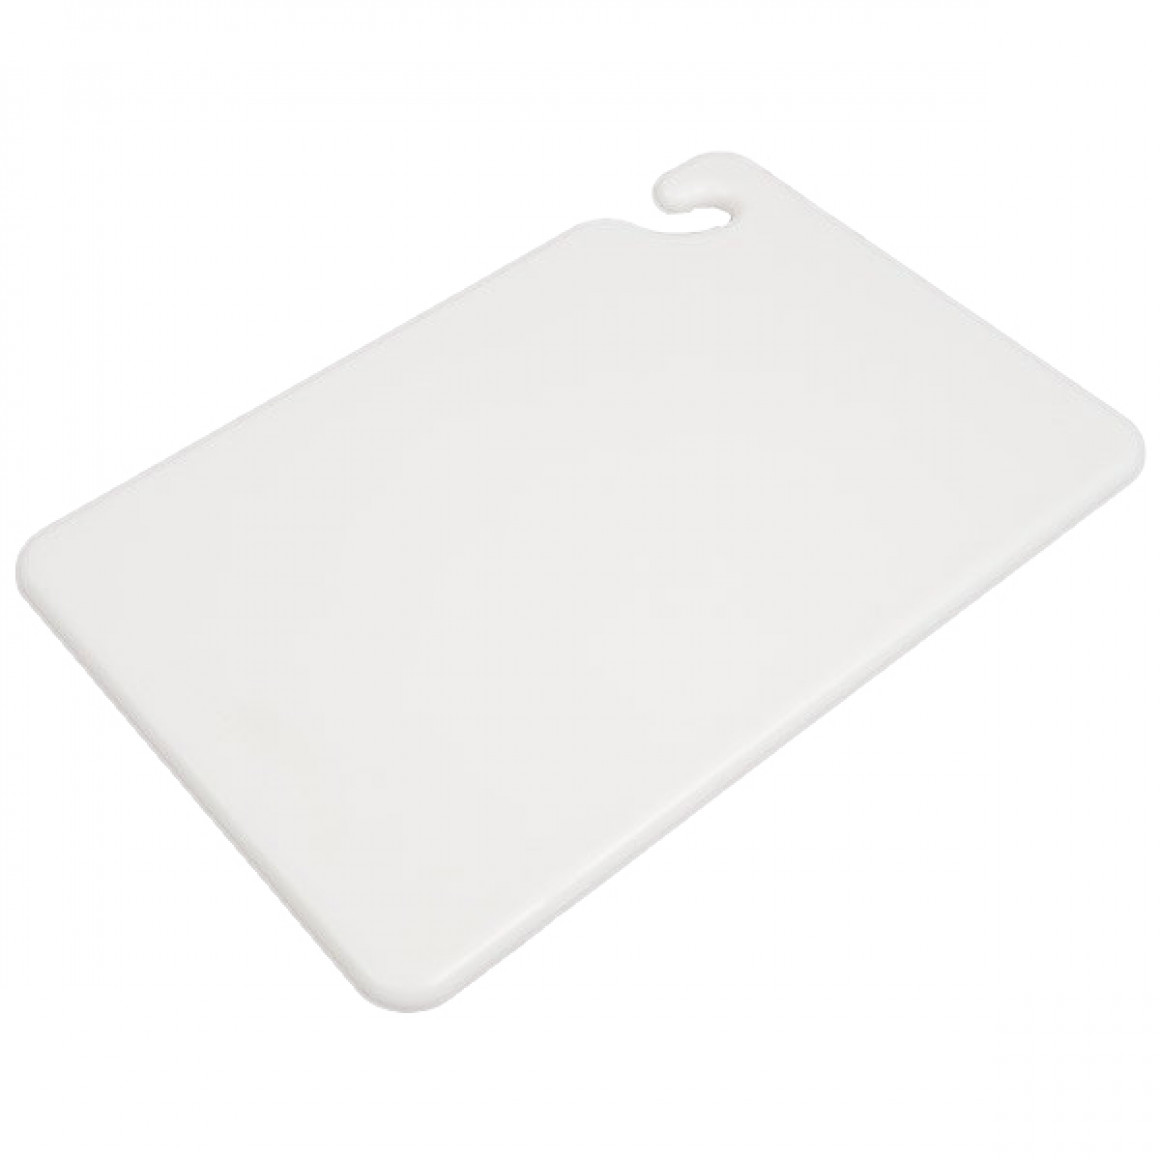 Cut-N-Carry Cutting Board - White